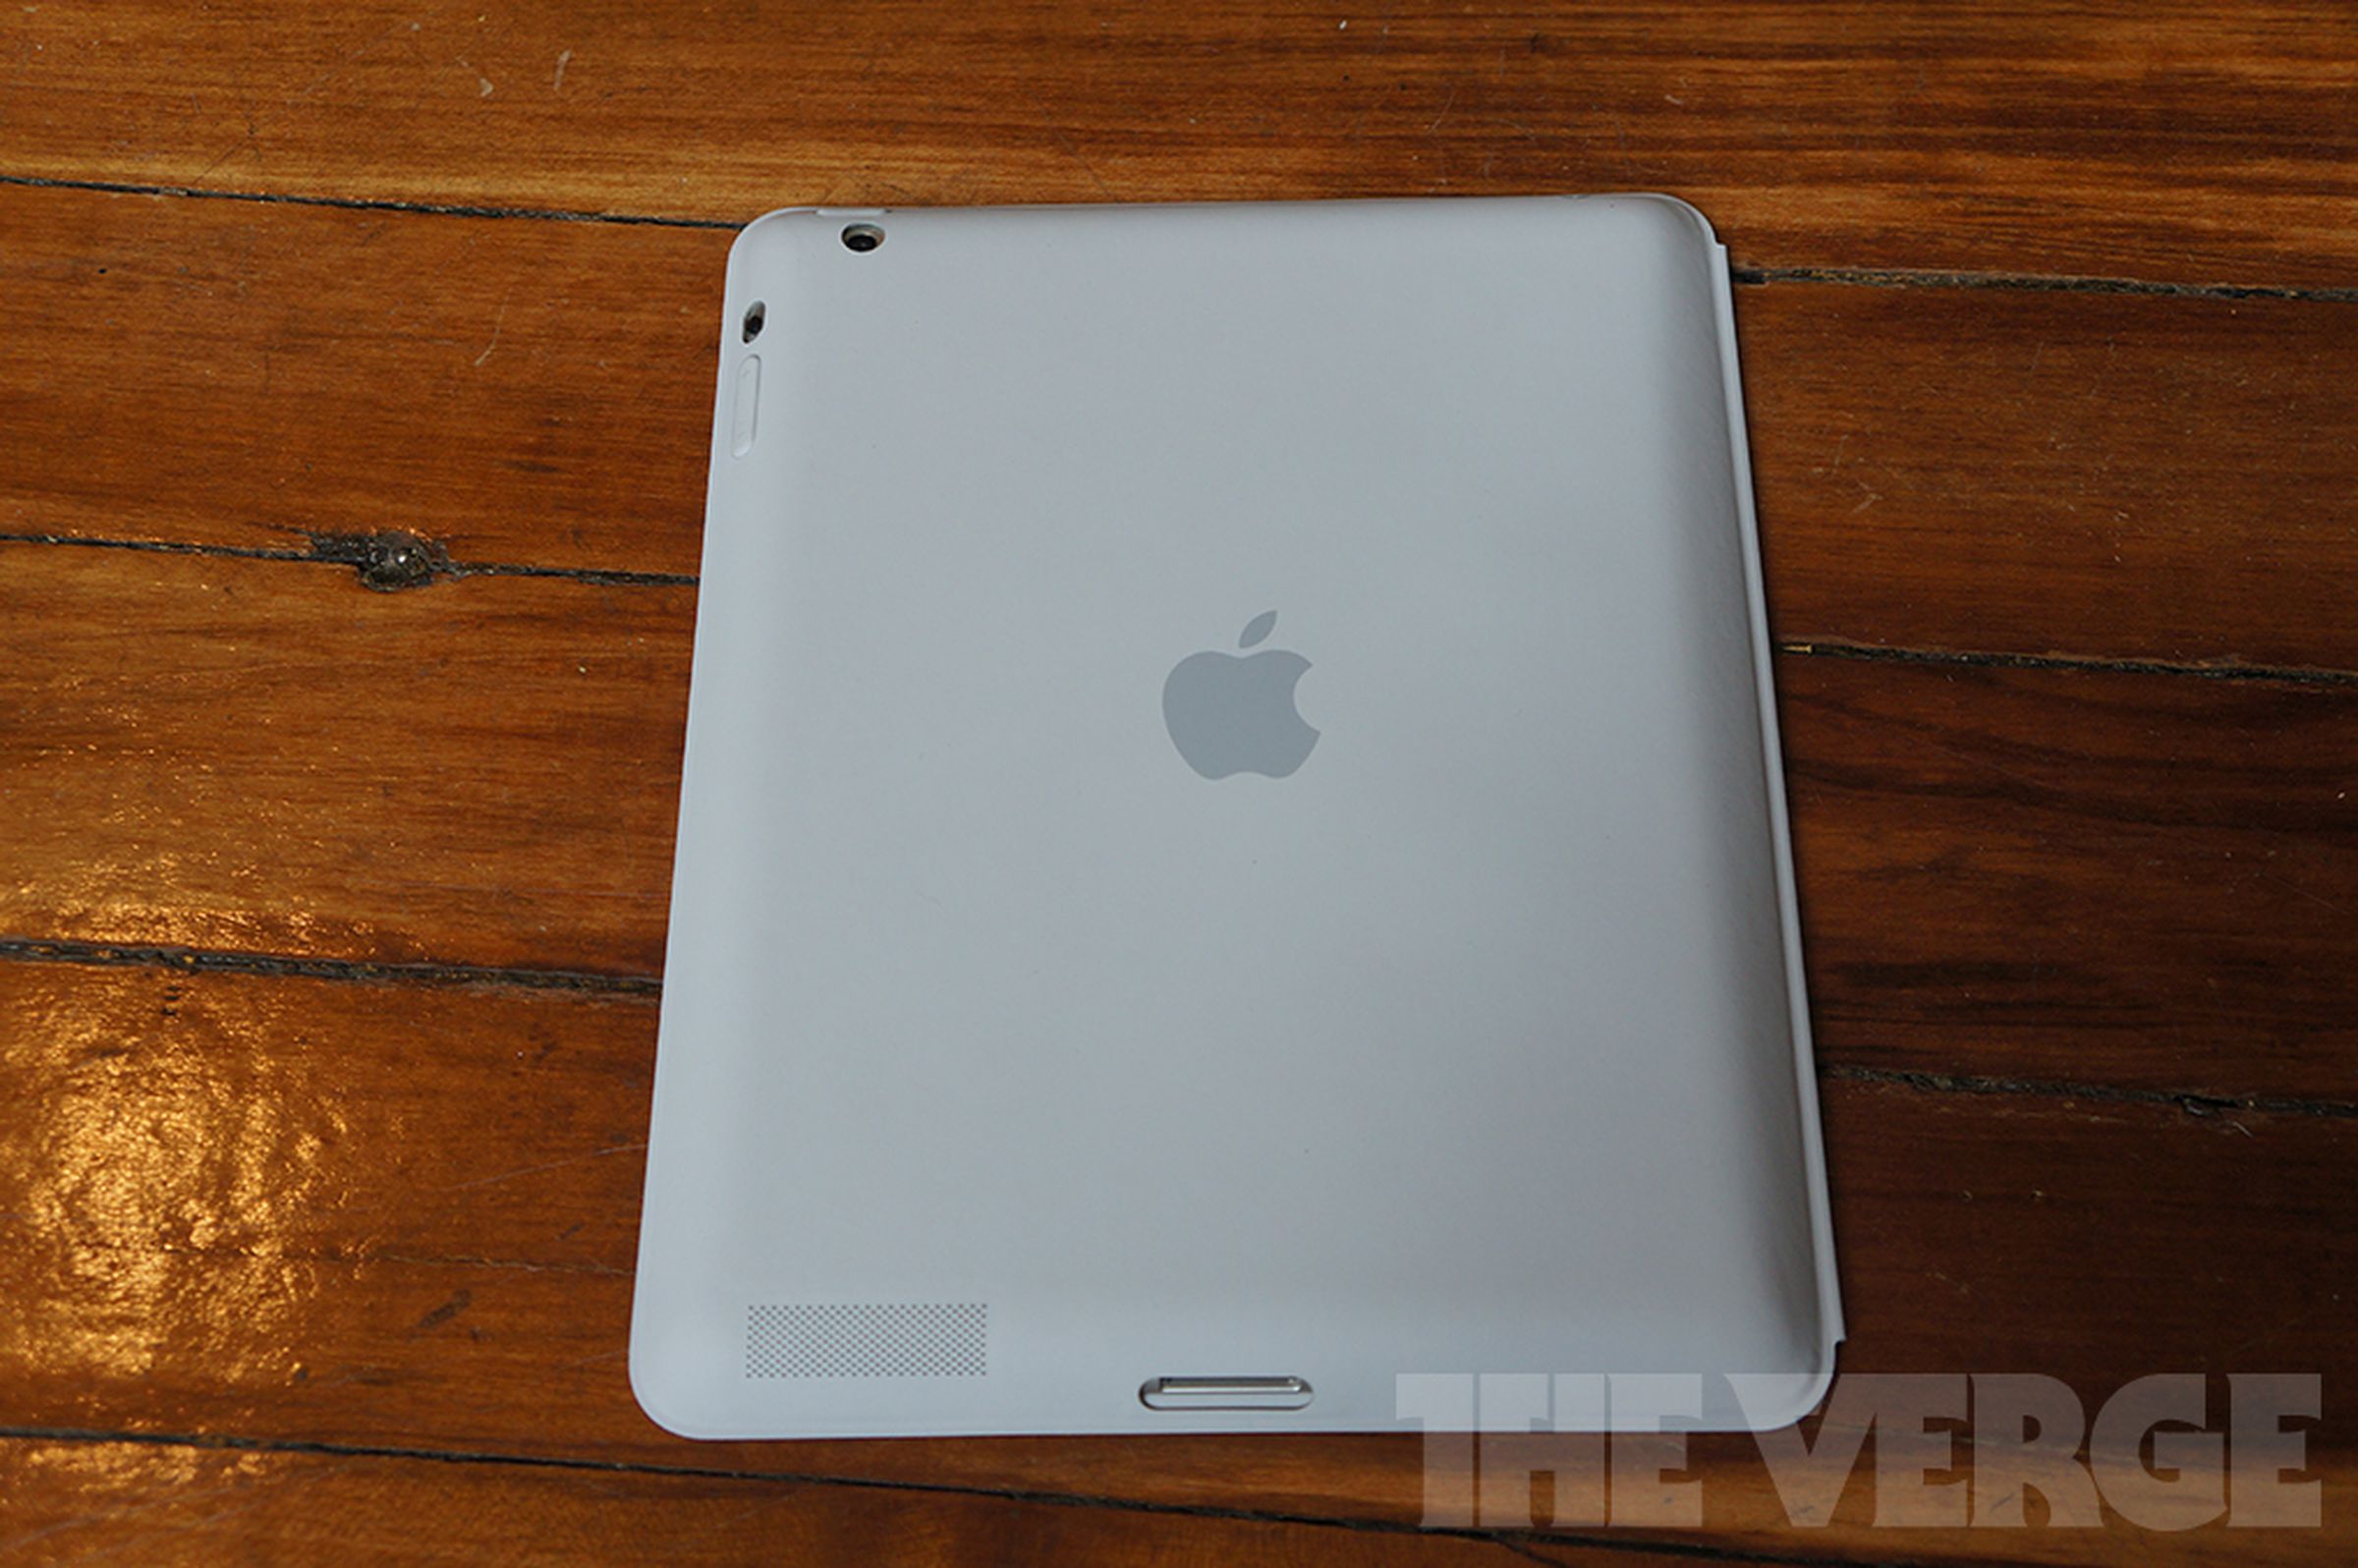 iPad Smart Case hands-on photos